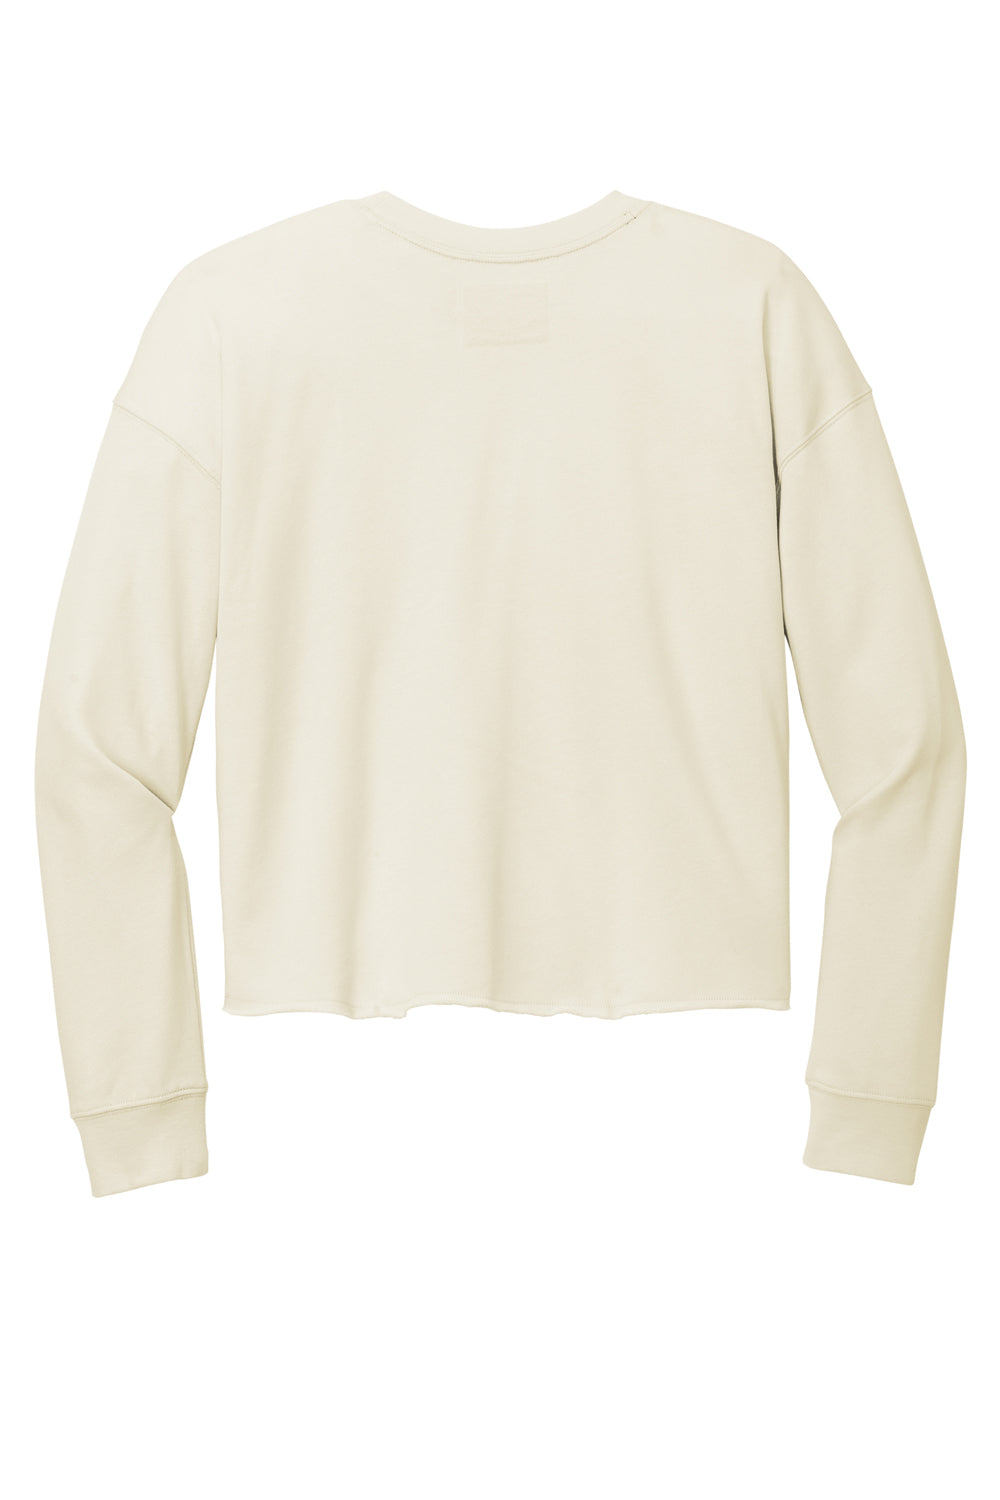 New Era Womens Fleece Crop Crewneck Sweatshirt Soft Beige Flat Back